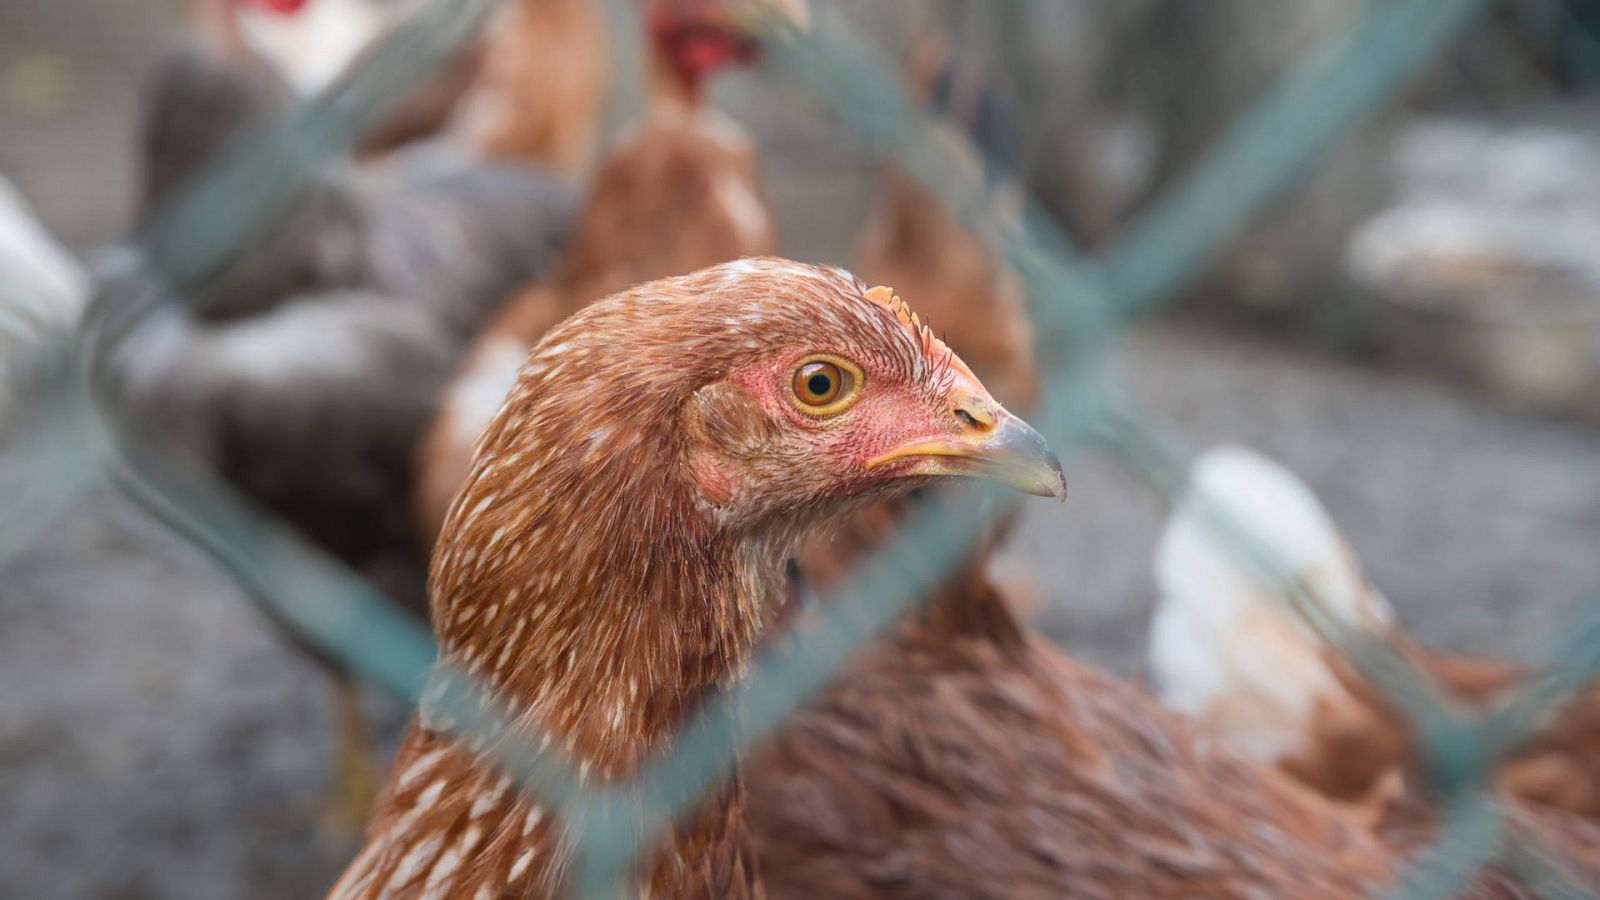 Veterinario sobre gripe aviar transmision humanos